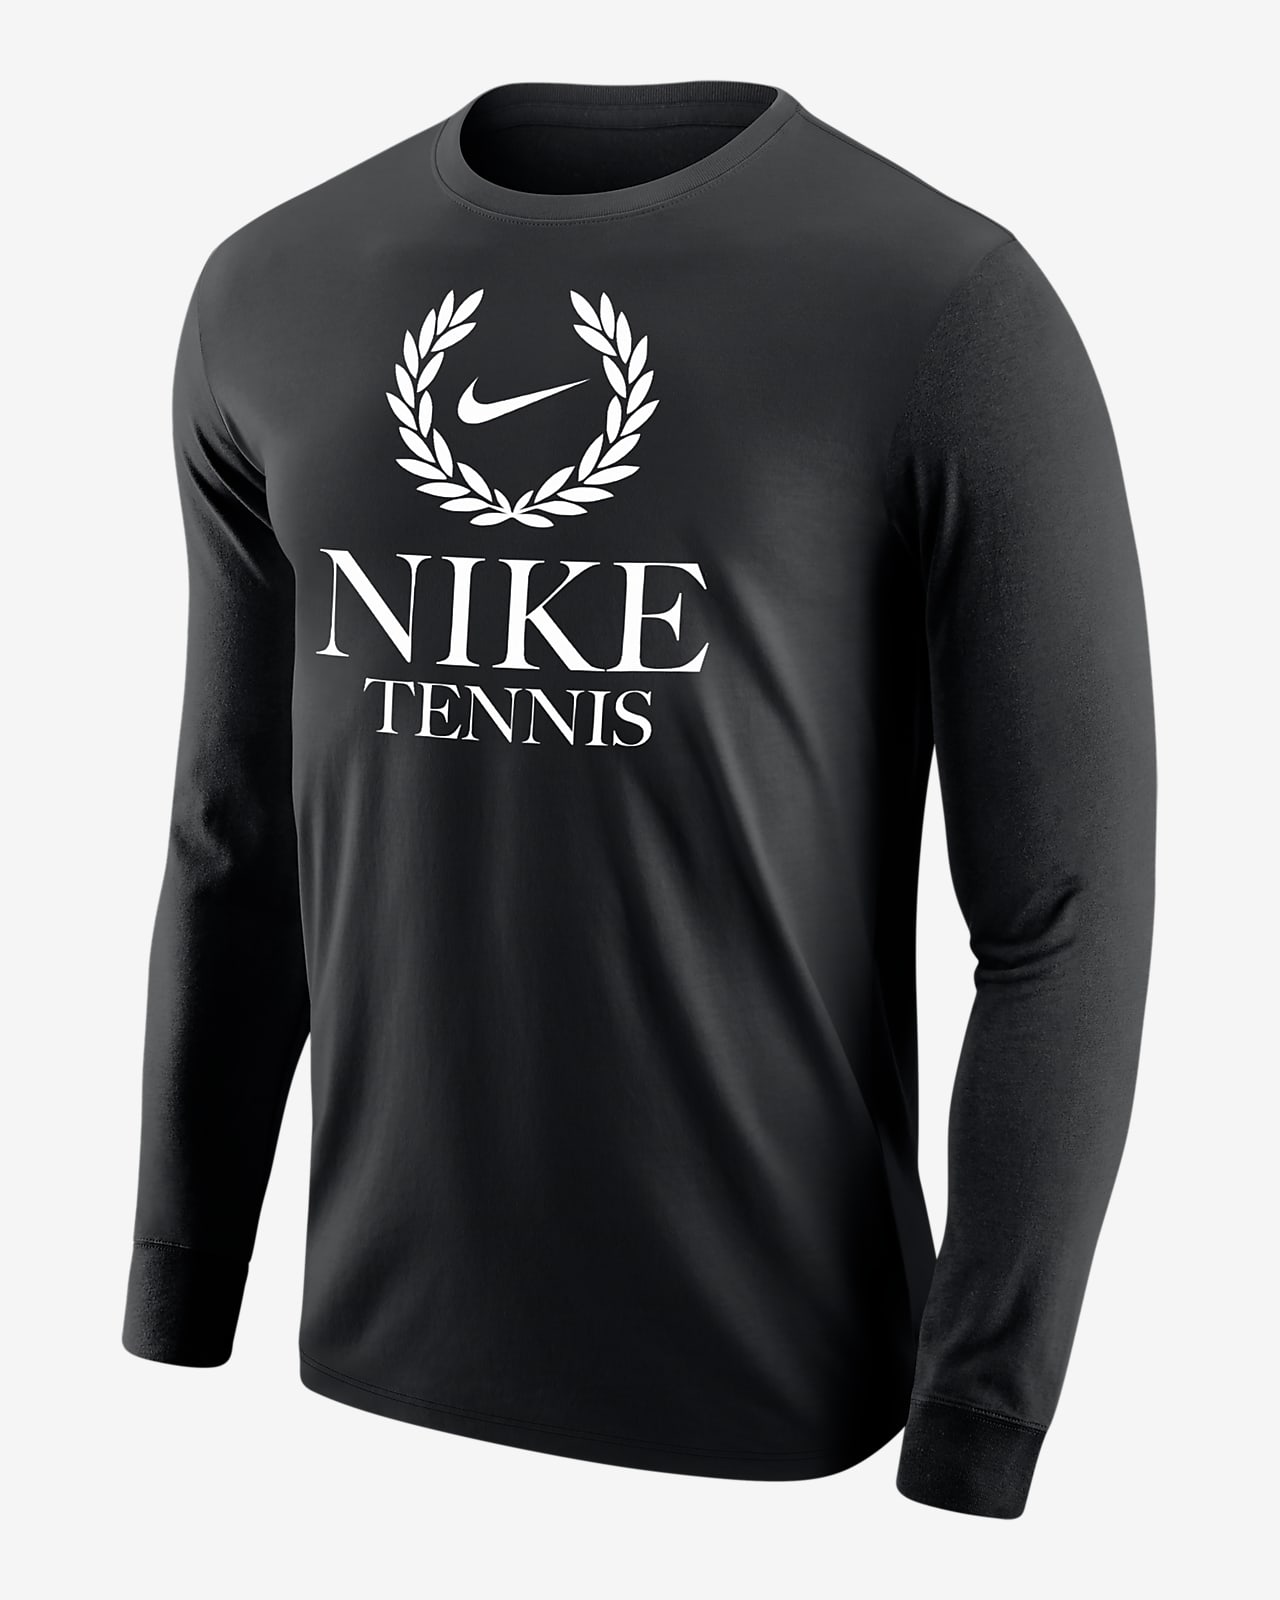 Nike Tennis Men's T-Shirt